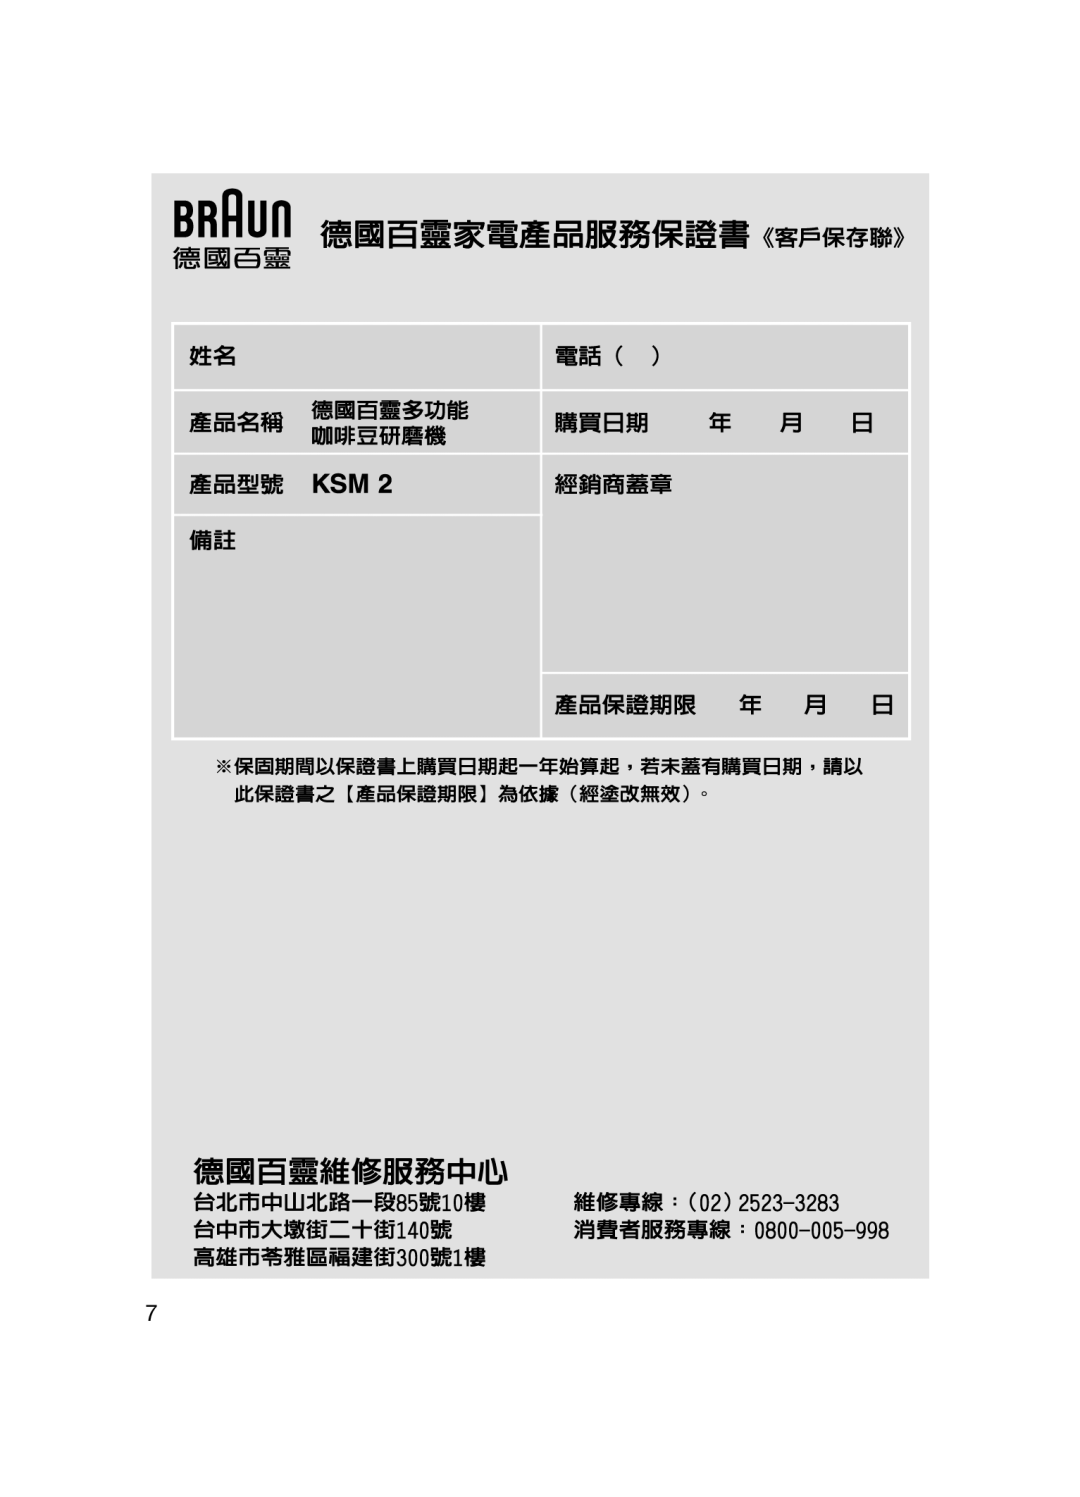 Braun 1440 manual 